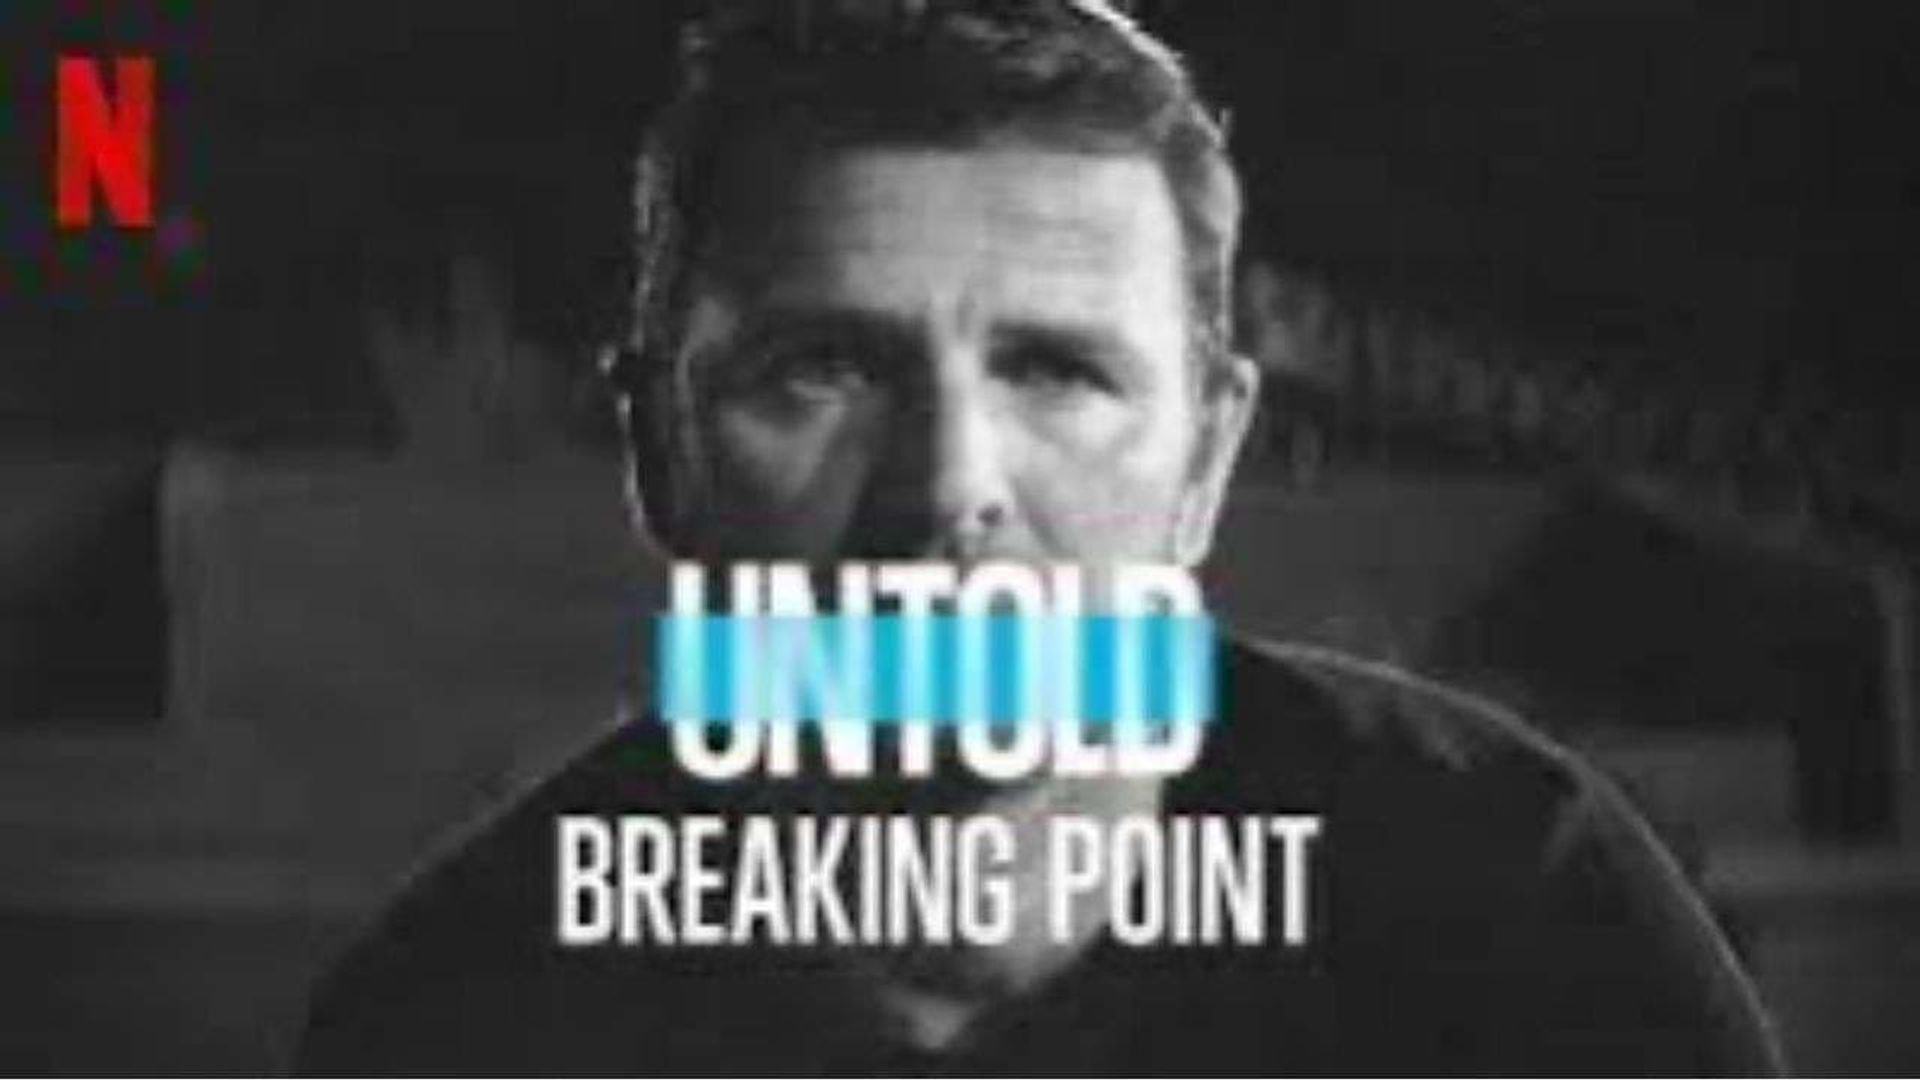 Untold Breaking Point (TV Episode 2021) - IMDb